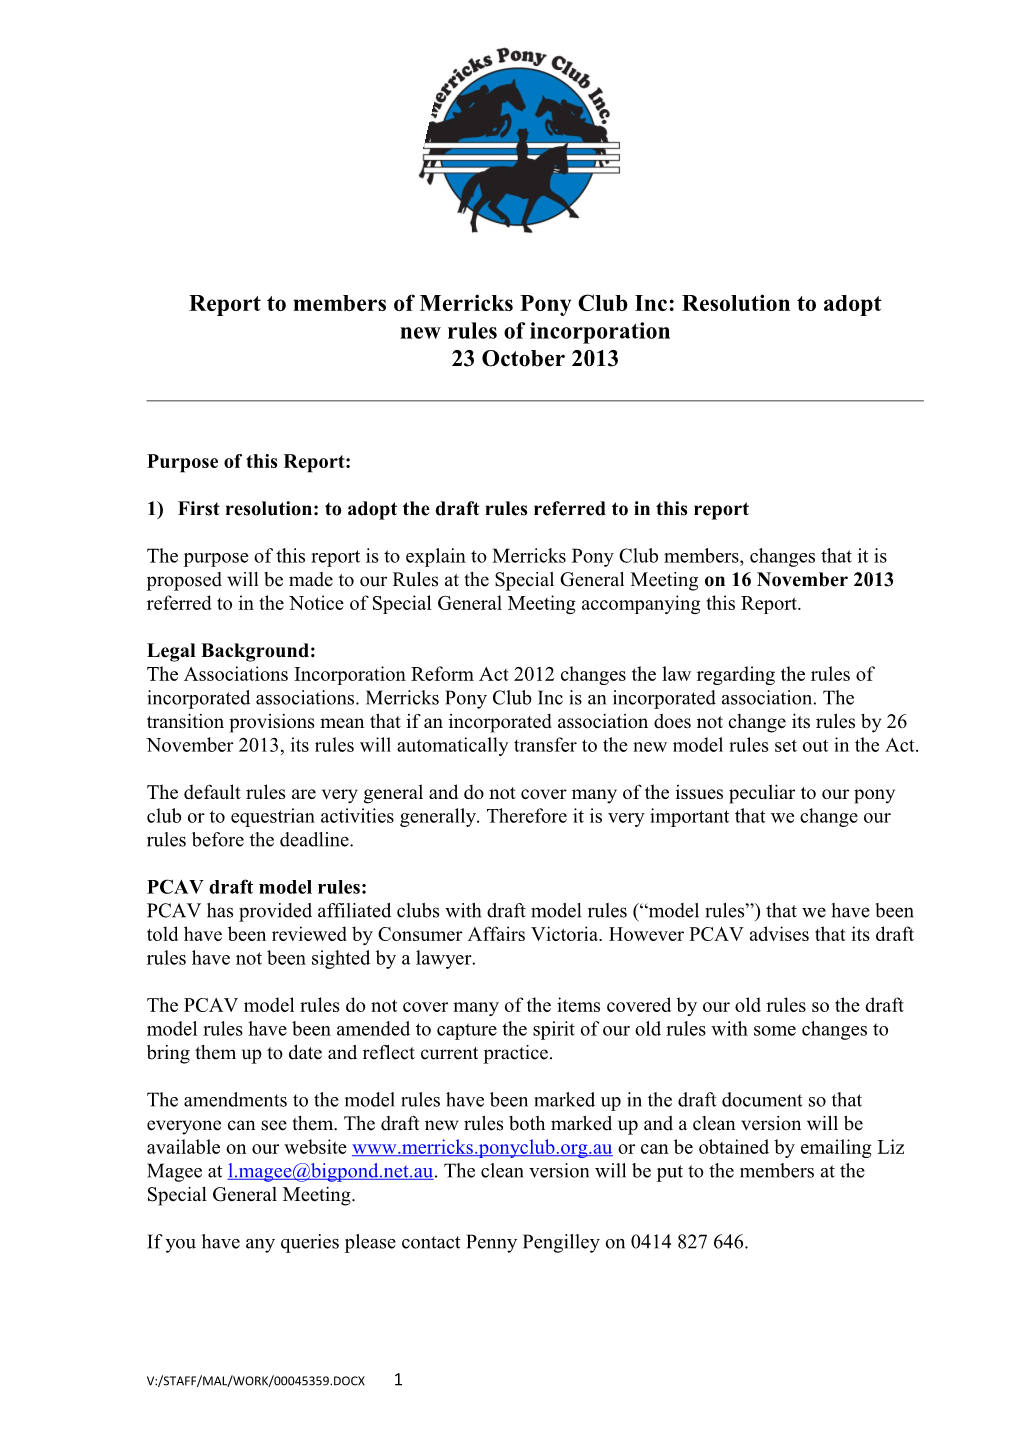 Report to Merricks Pony Club Association October 2013 (00045359;1)